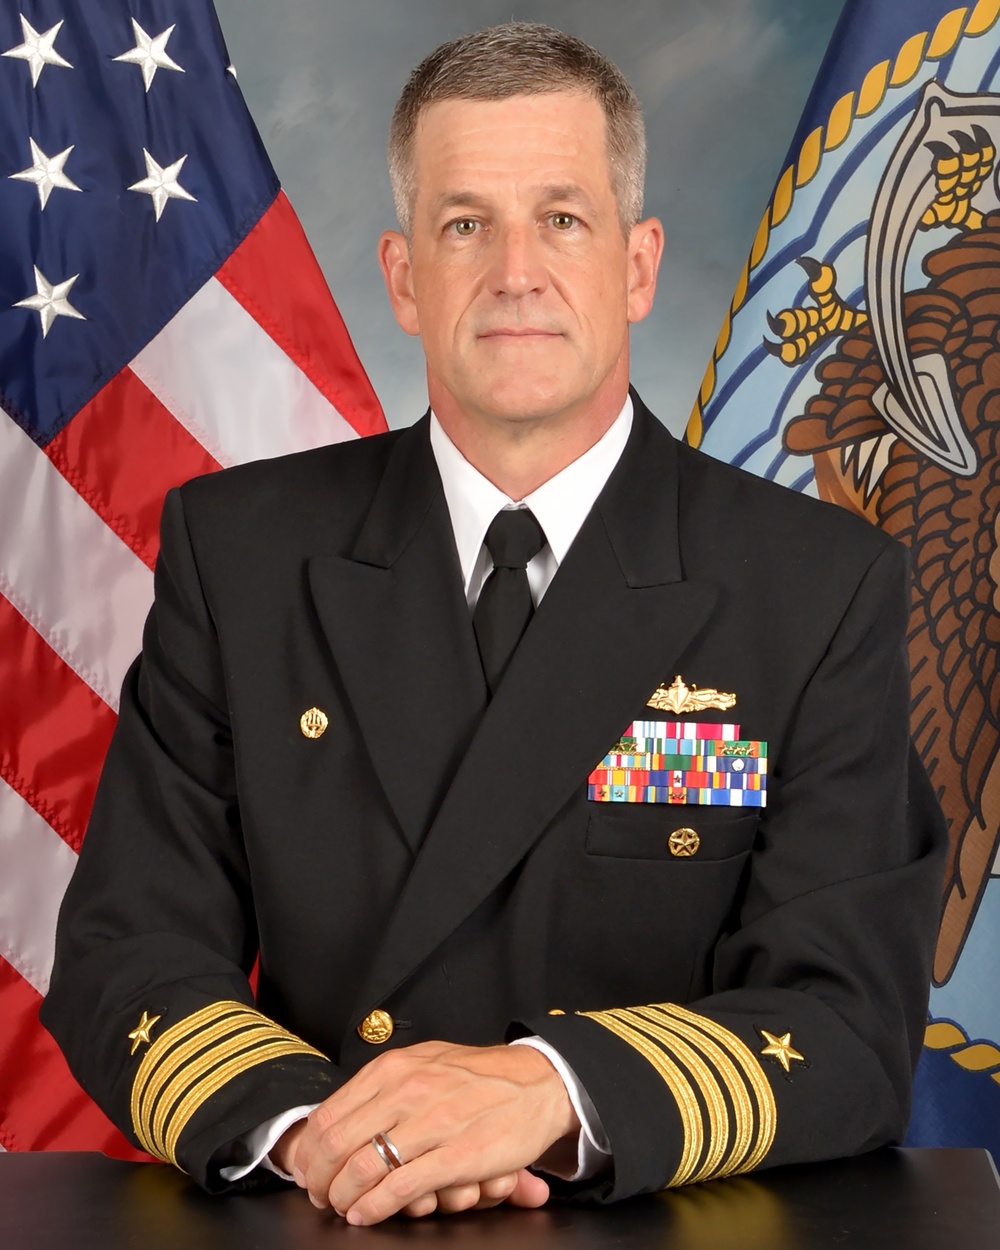 Official U.S. Navy photo of Capt. Douglas J. Pegher.